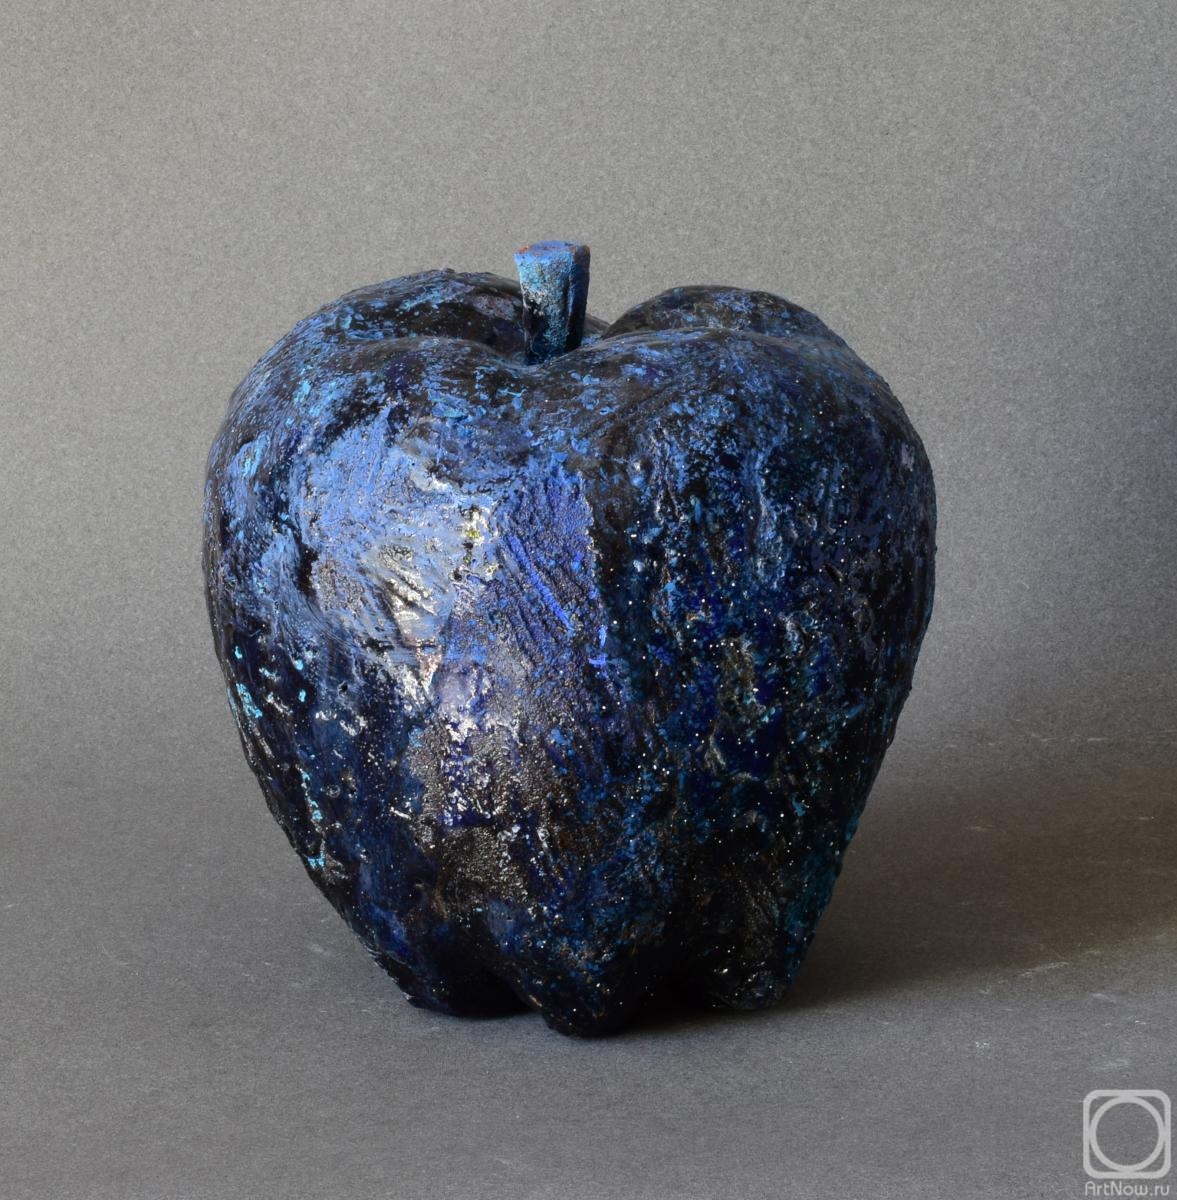 Grekova-Prohorenko Sofiya. Blue Apple